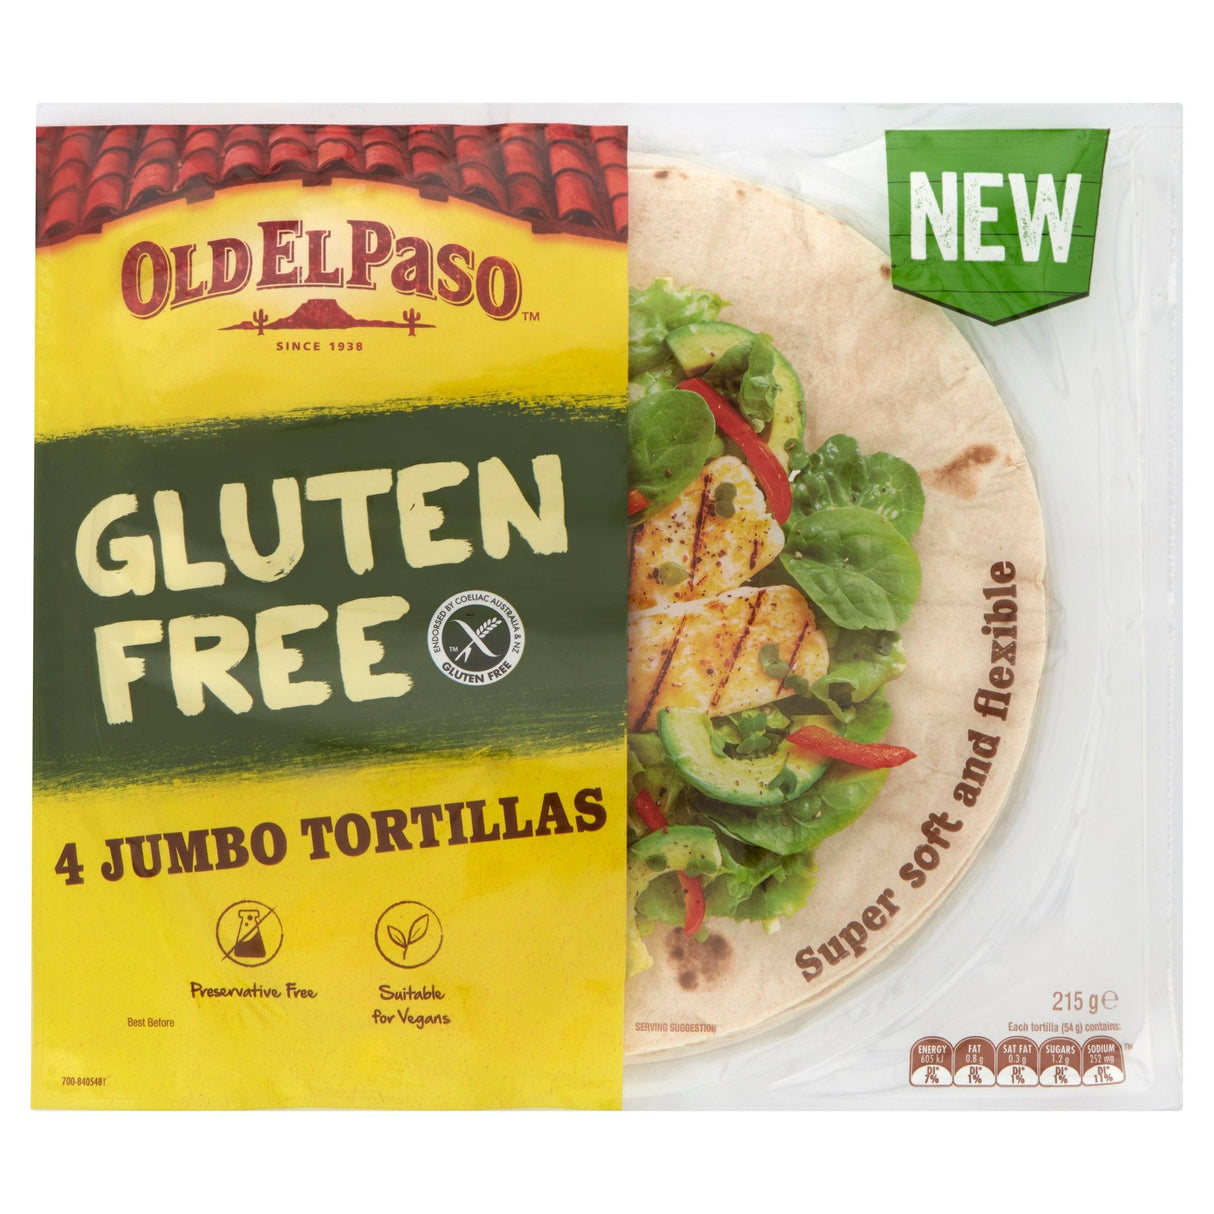 Old El Paso Gluten Free Jumbo Tortillas 4 Pack 215g